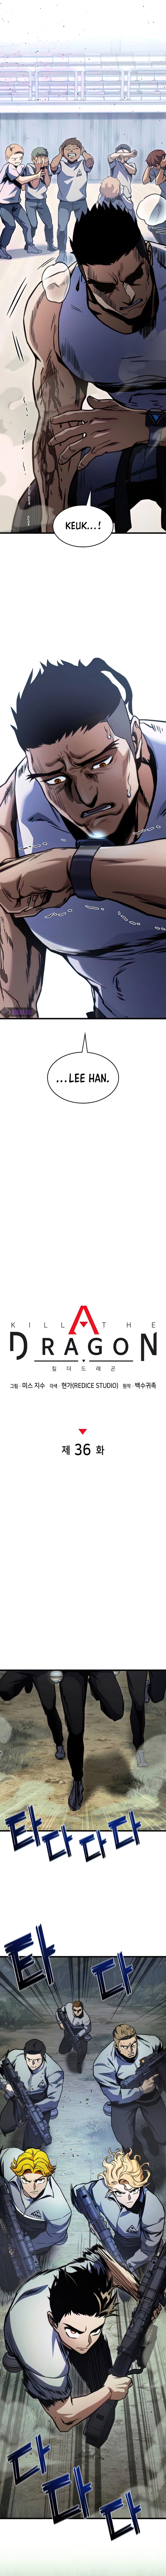 Kill The Dragon 36